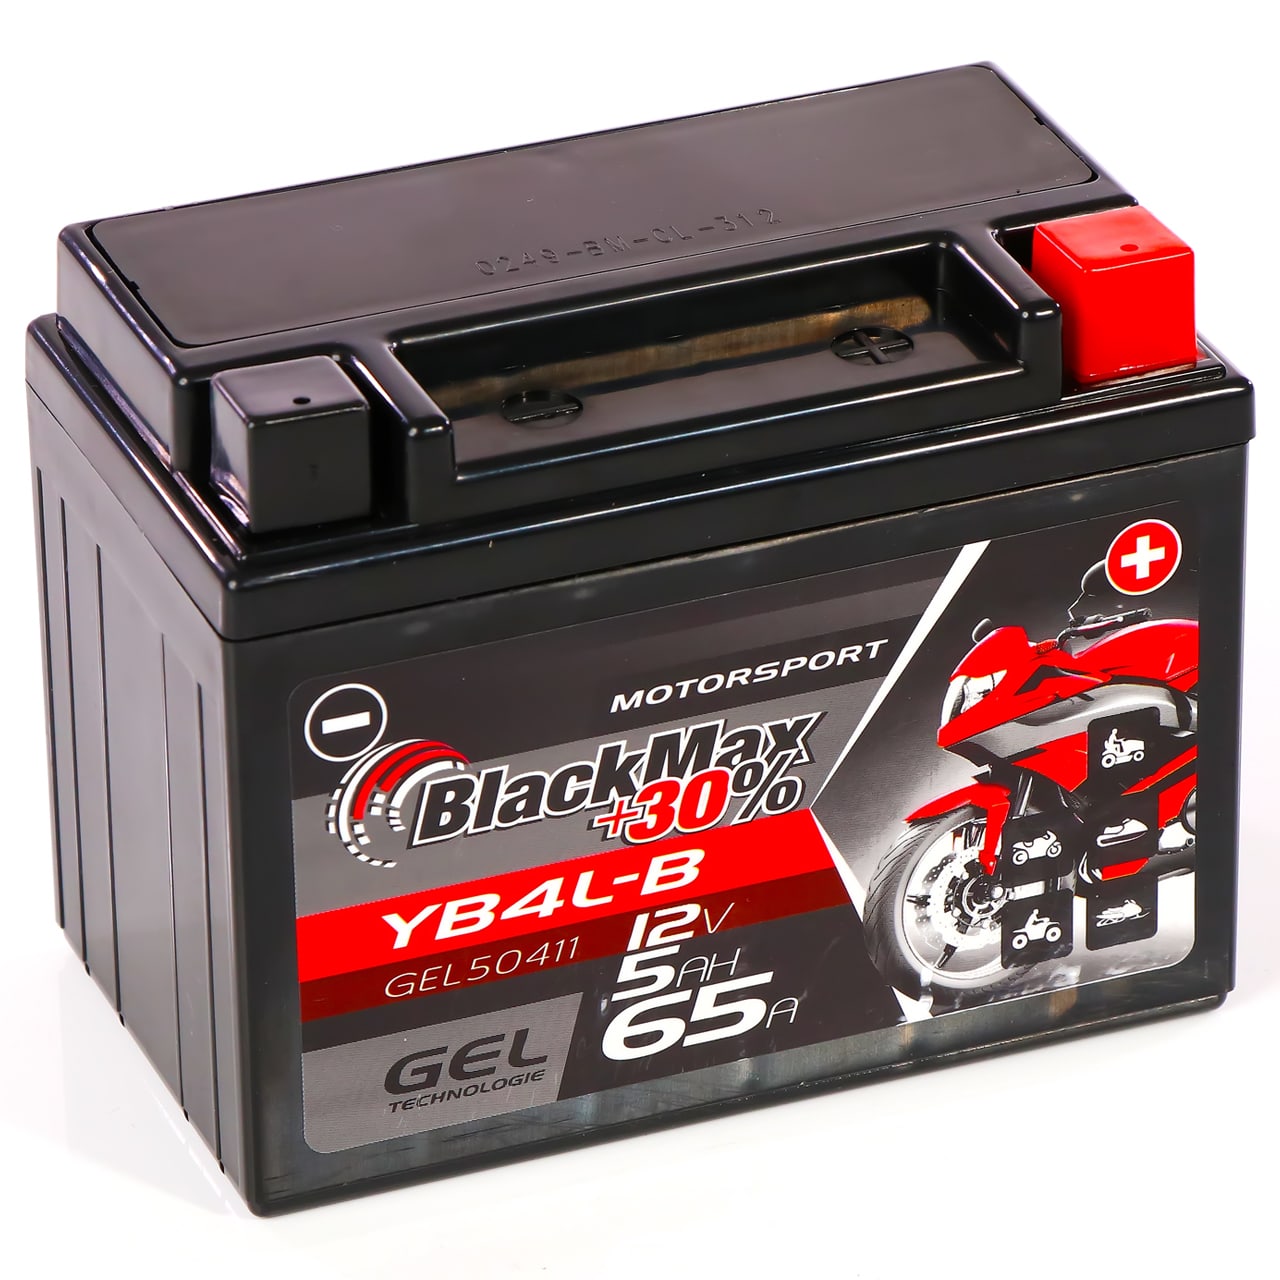 LANGZEIT YB4L-B GEL Roller Batterie 12V 5Ah 110A/EN GEL Batterie 12V  Motorradbatterie doppelte Lebensdauer entspricht CB4L-B 50411 12N4-3B  YB4L-A